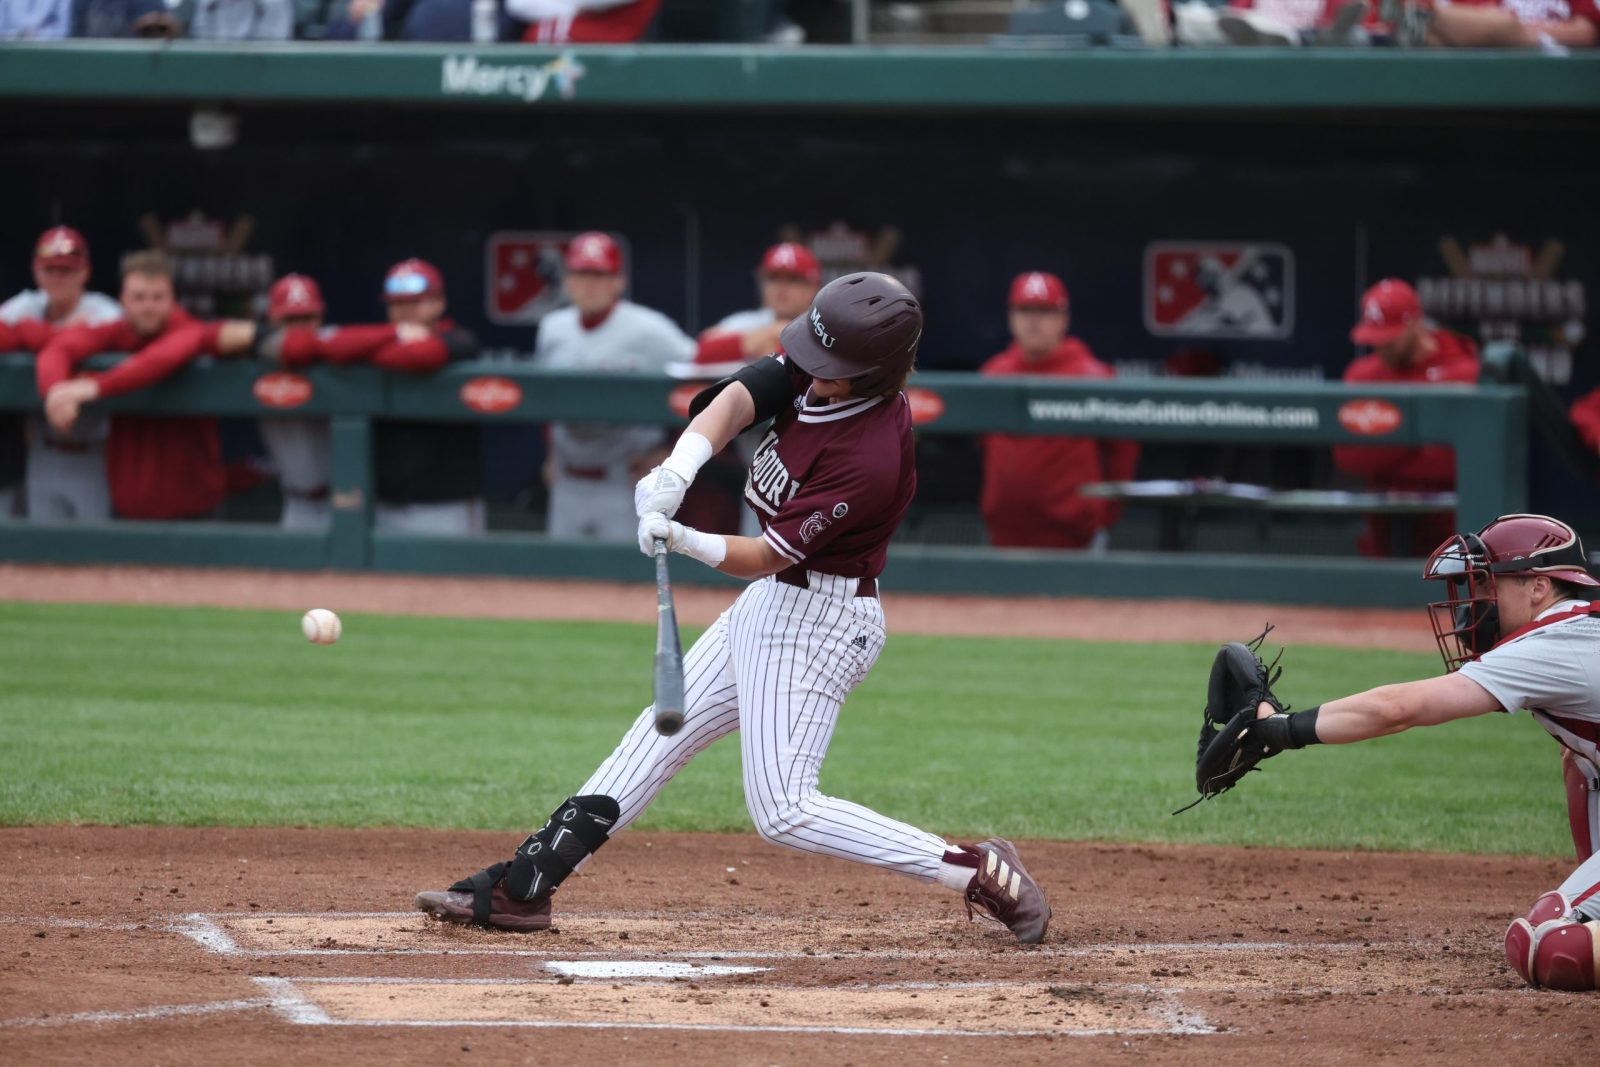 A baseball player hits a home run